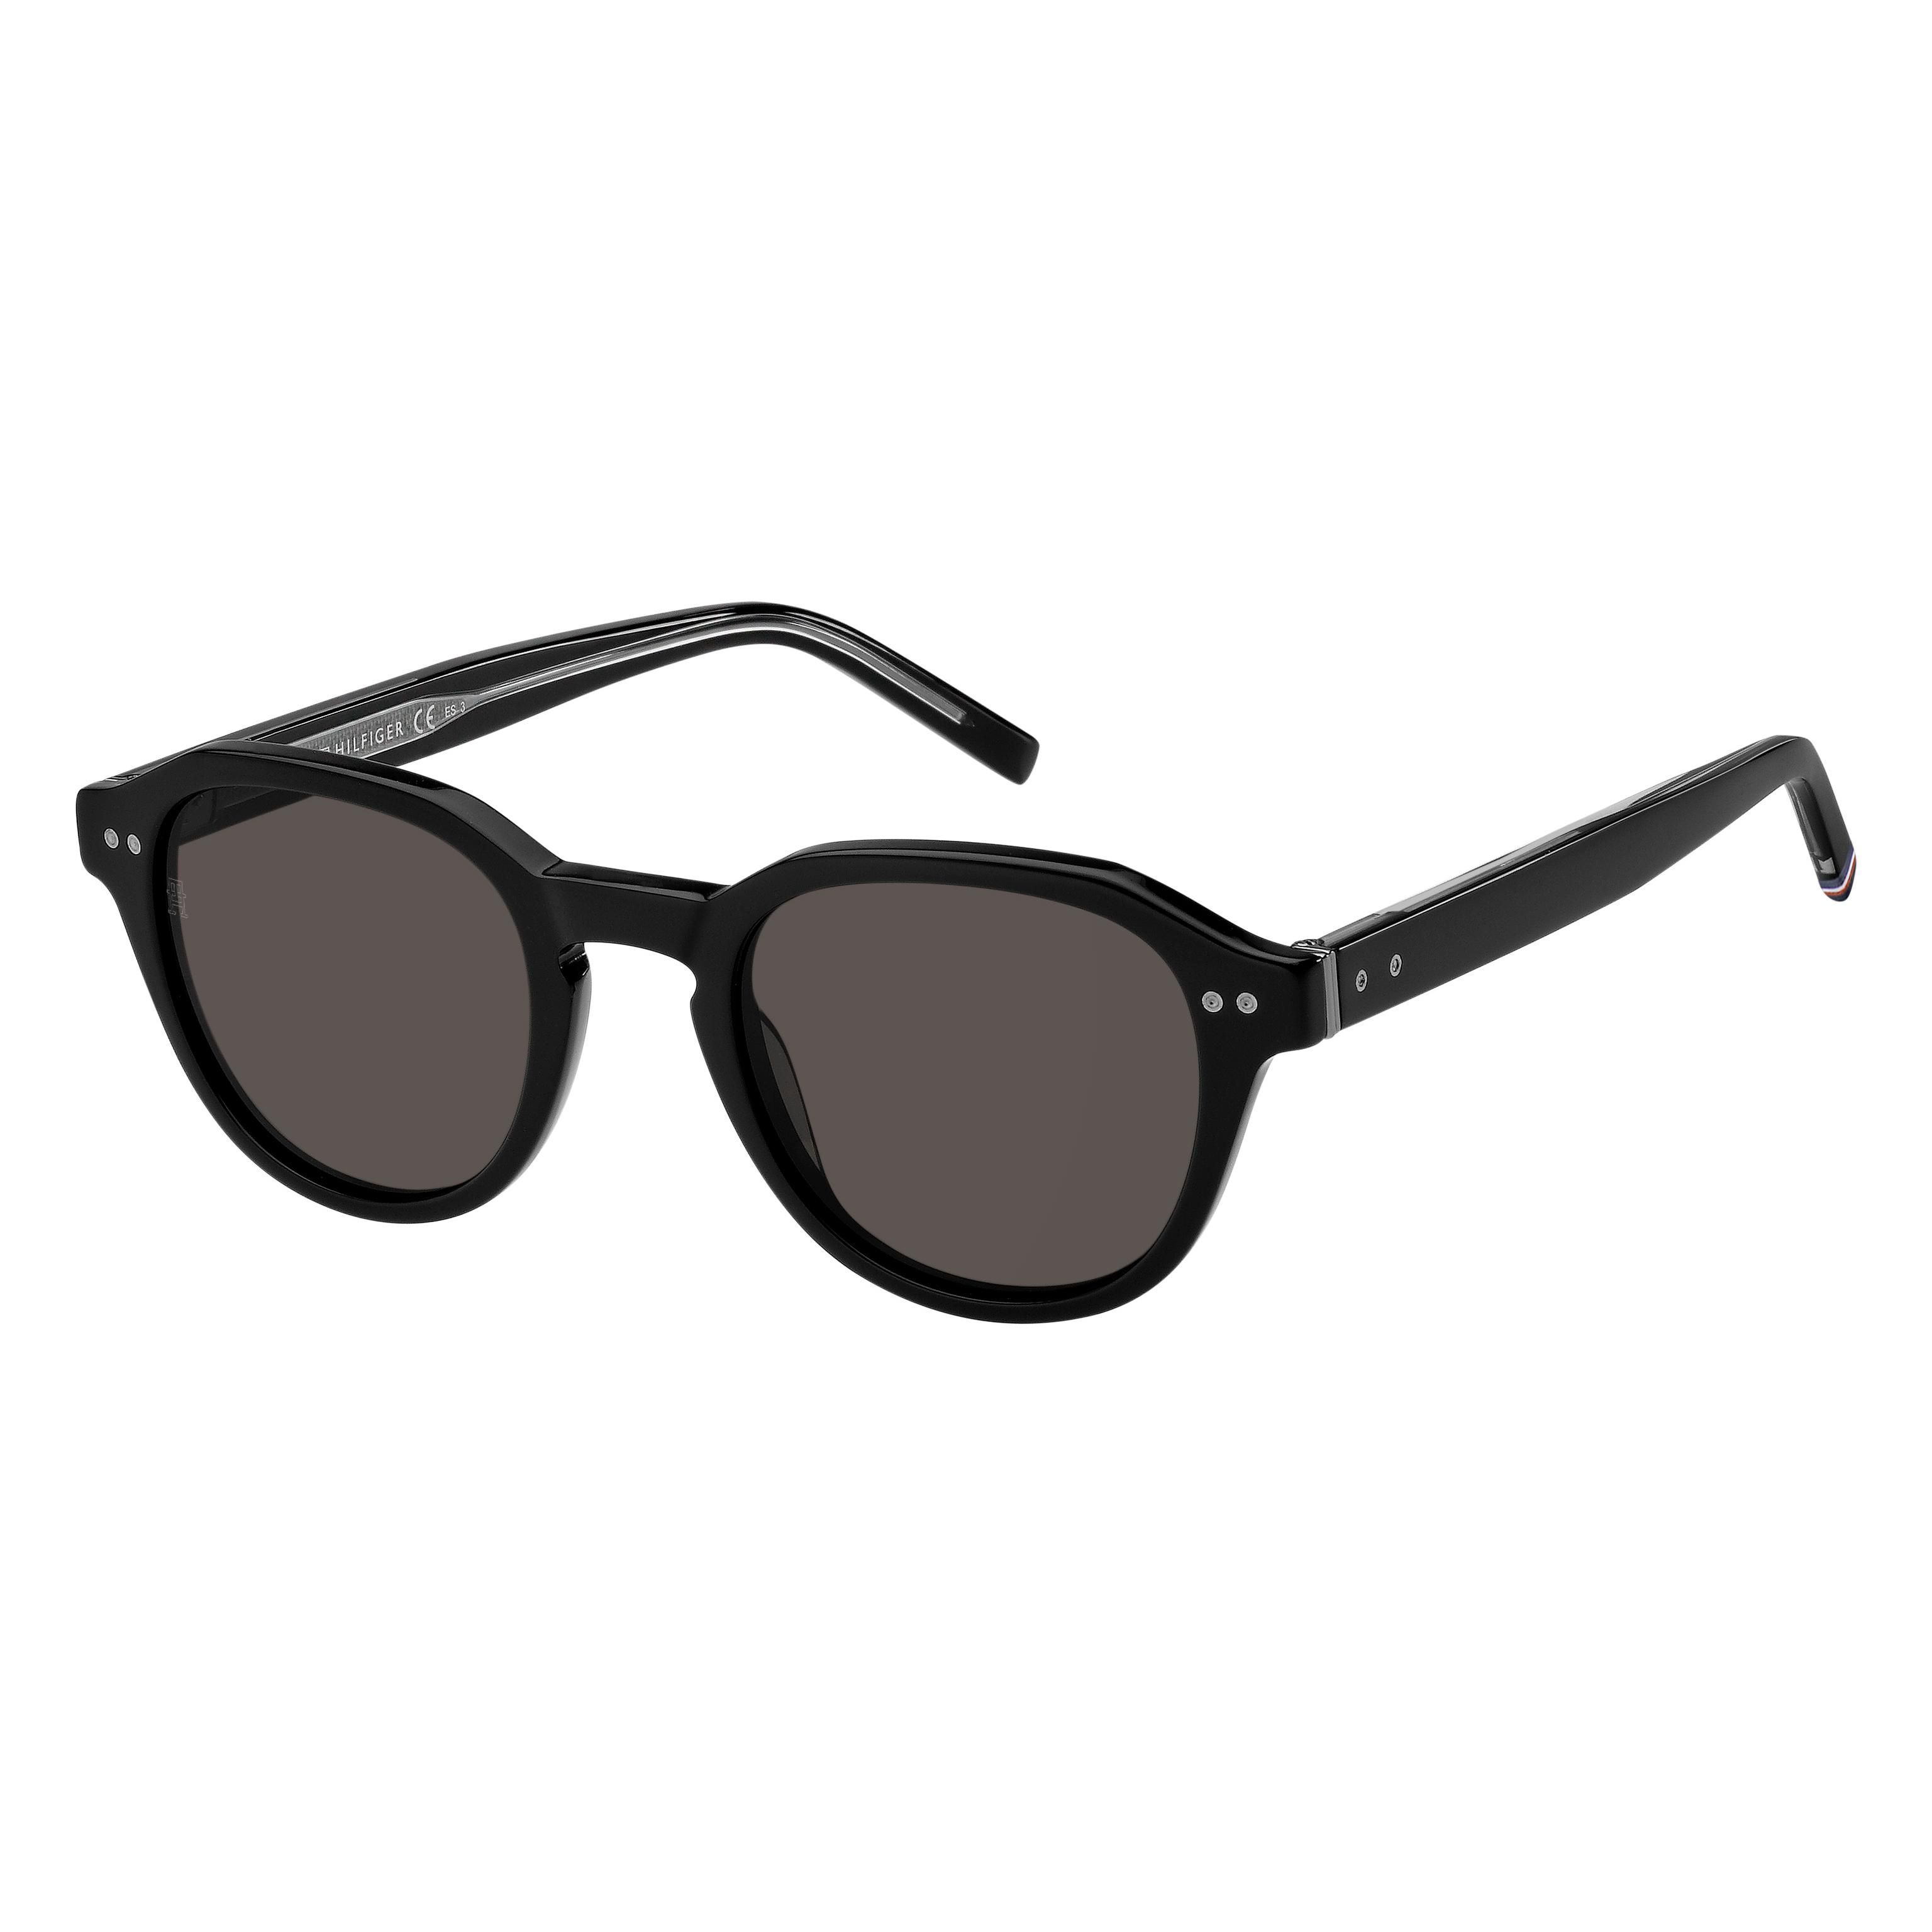 TH 1970 S Round Sunglasses 807 - size 49